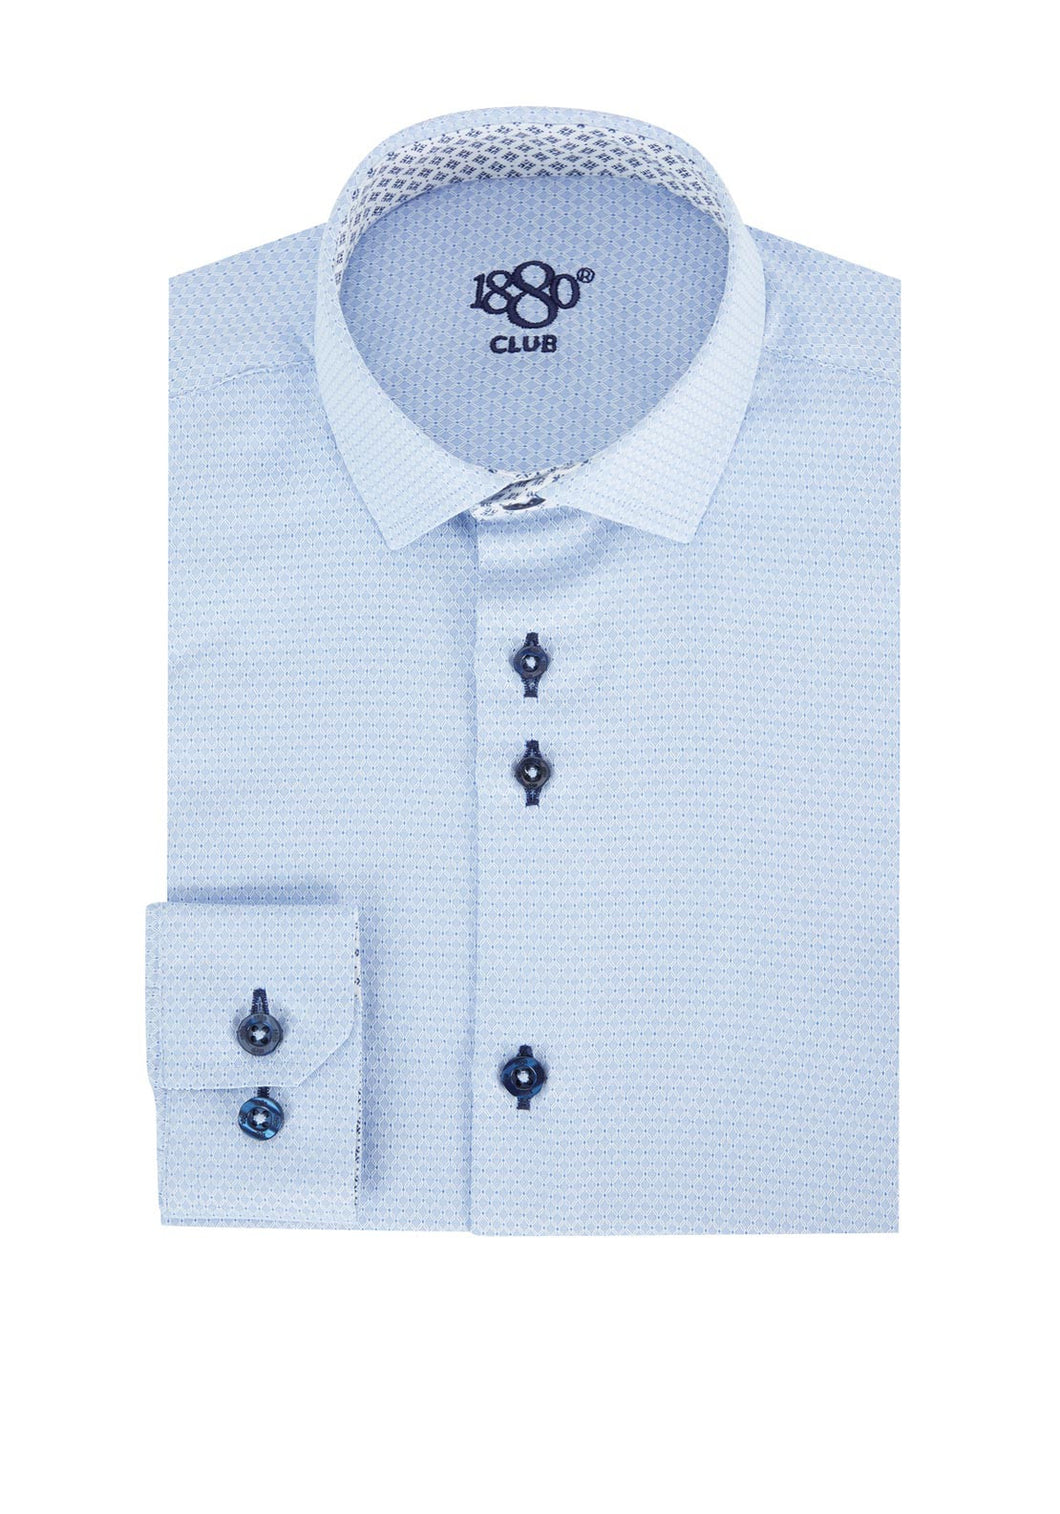 1880 Club Boys Cadiz Blue Textured Shirt With Navy Buttons